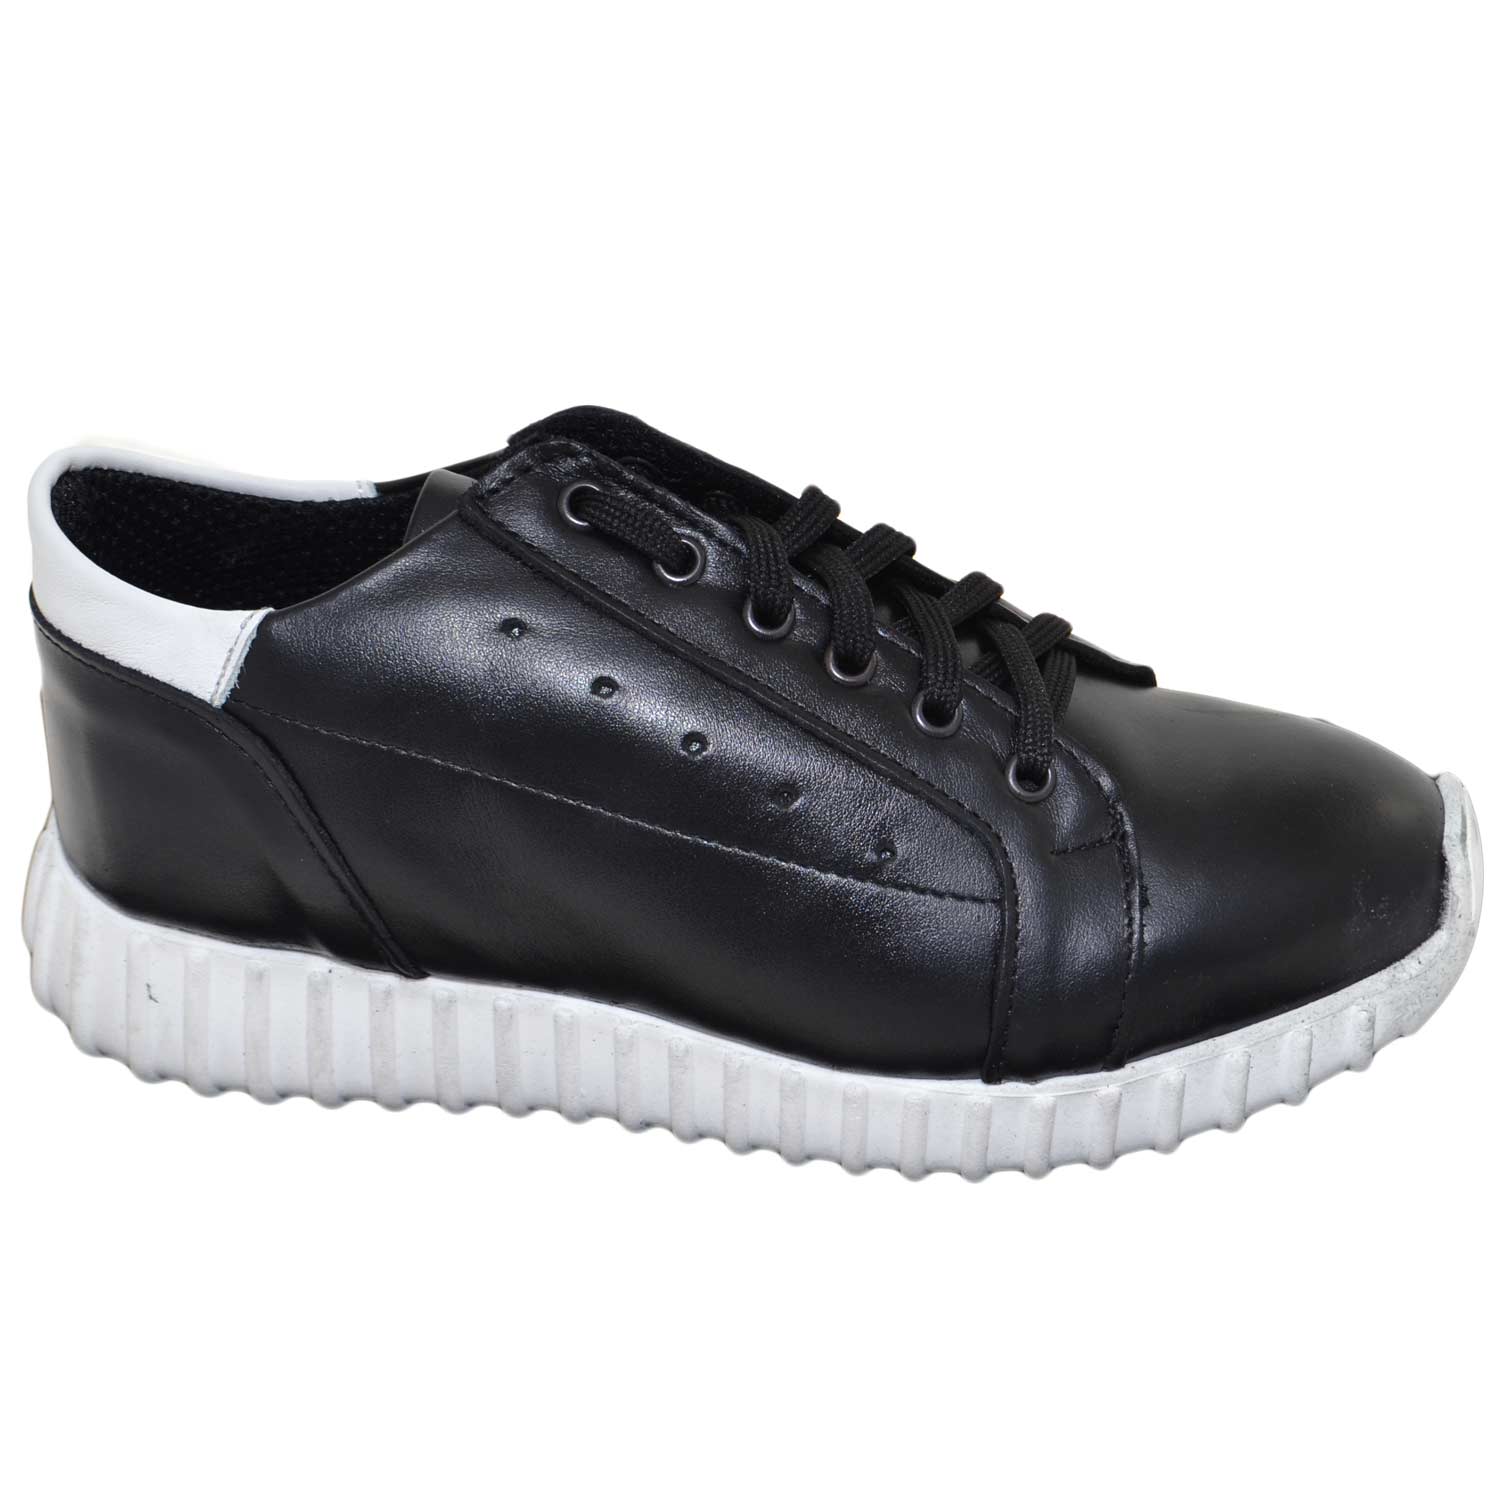 Sneakers alta uomo art.662 nera made in italy vera pelle fondo running comfort rifinimenti in bianco.